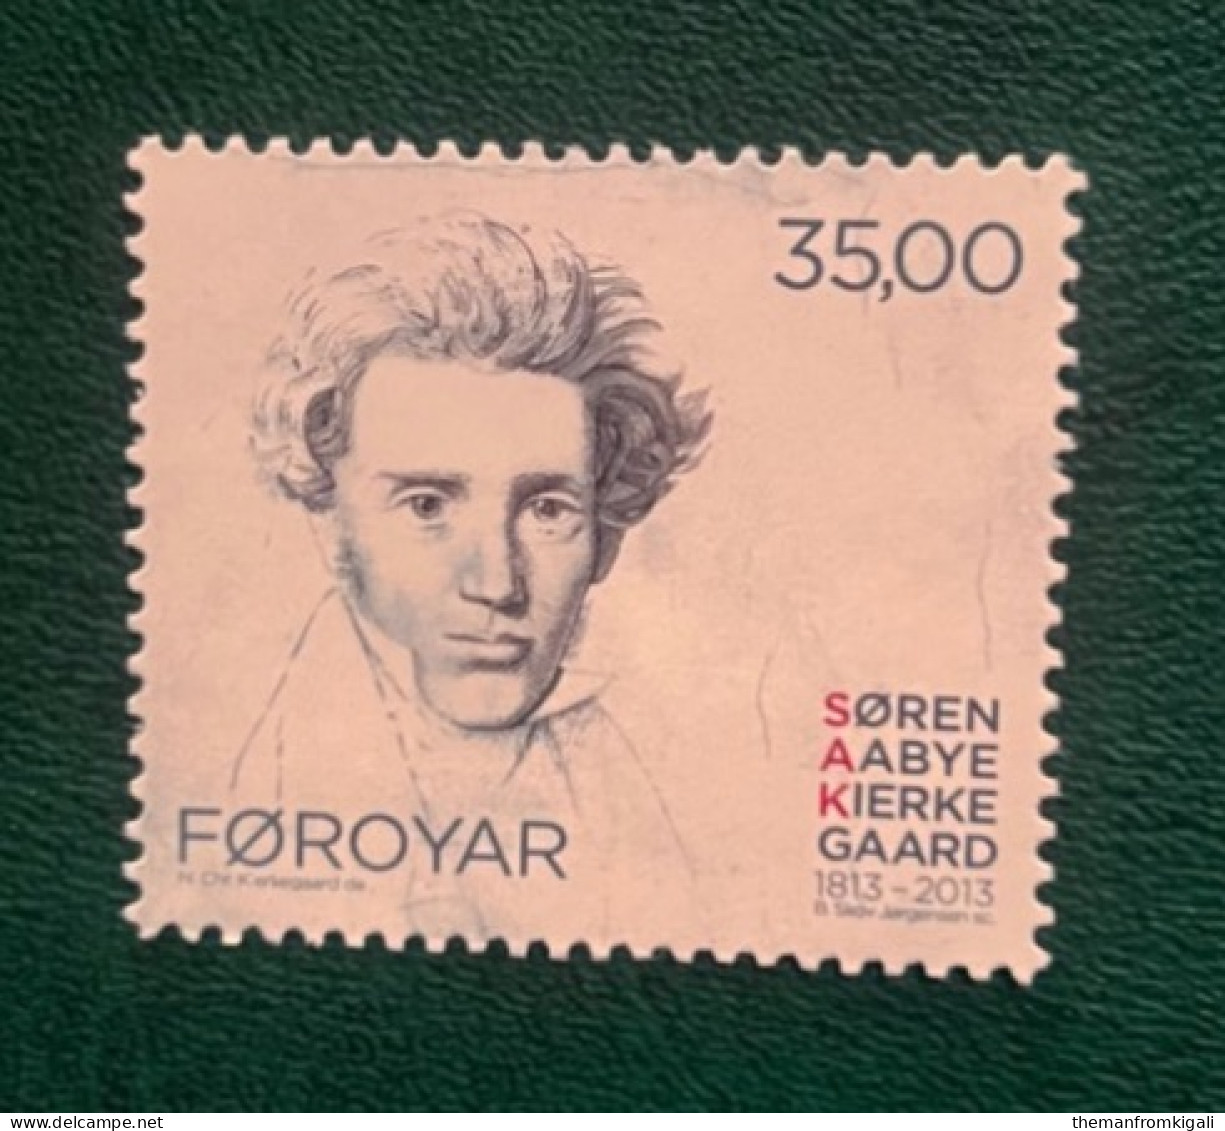 Faroe Islands 2013 The 200th Anniversary Of The Birth Of Søren Kierkegaard, 1813-1855 - Joint Issue With Denmark - Faroe Islands